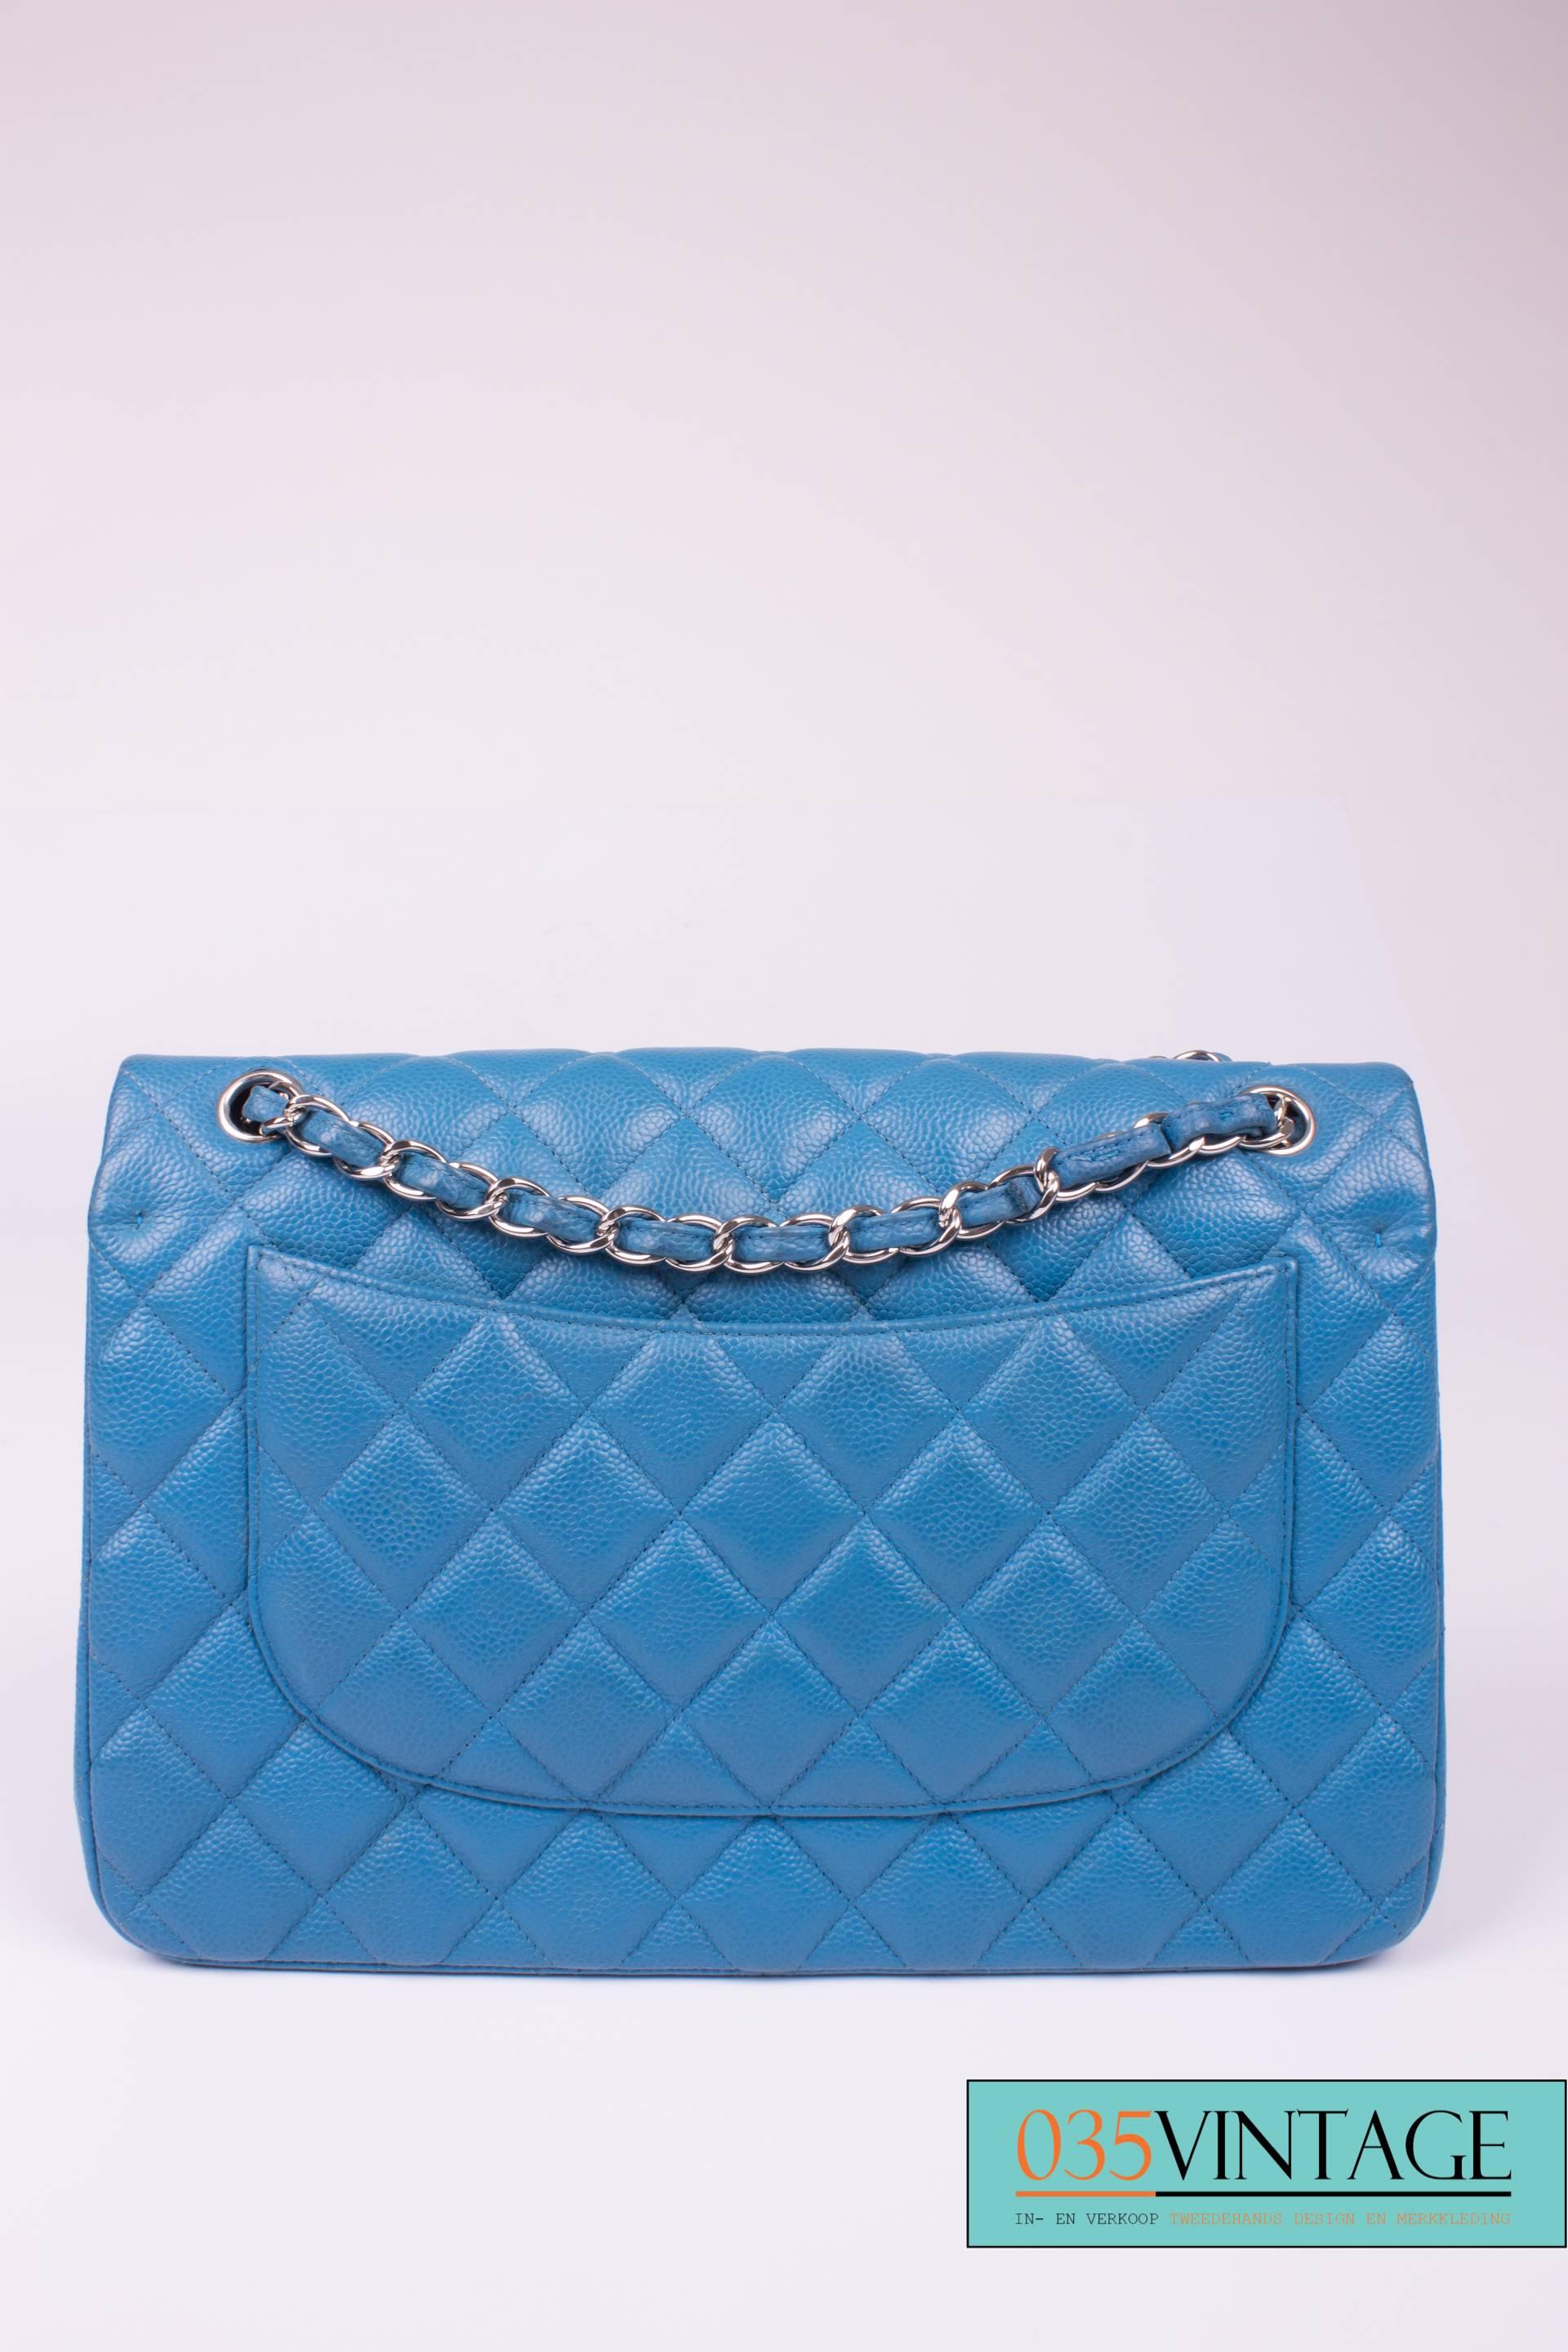 Chanel 2.55 Timeless Jumbo Double Flap Bag - blue caviar leather  1